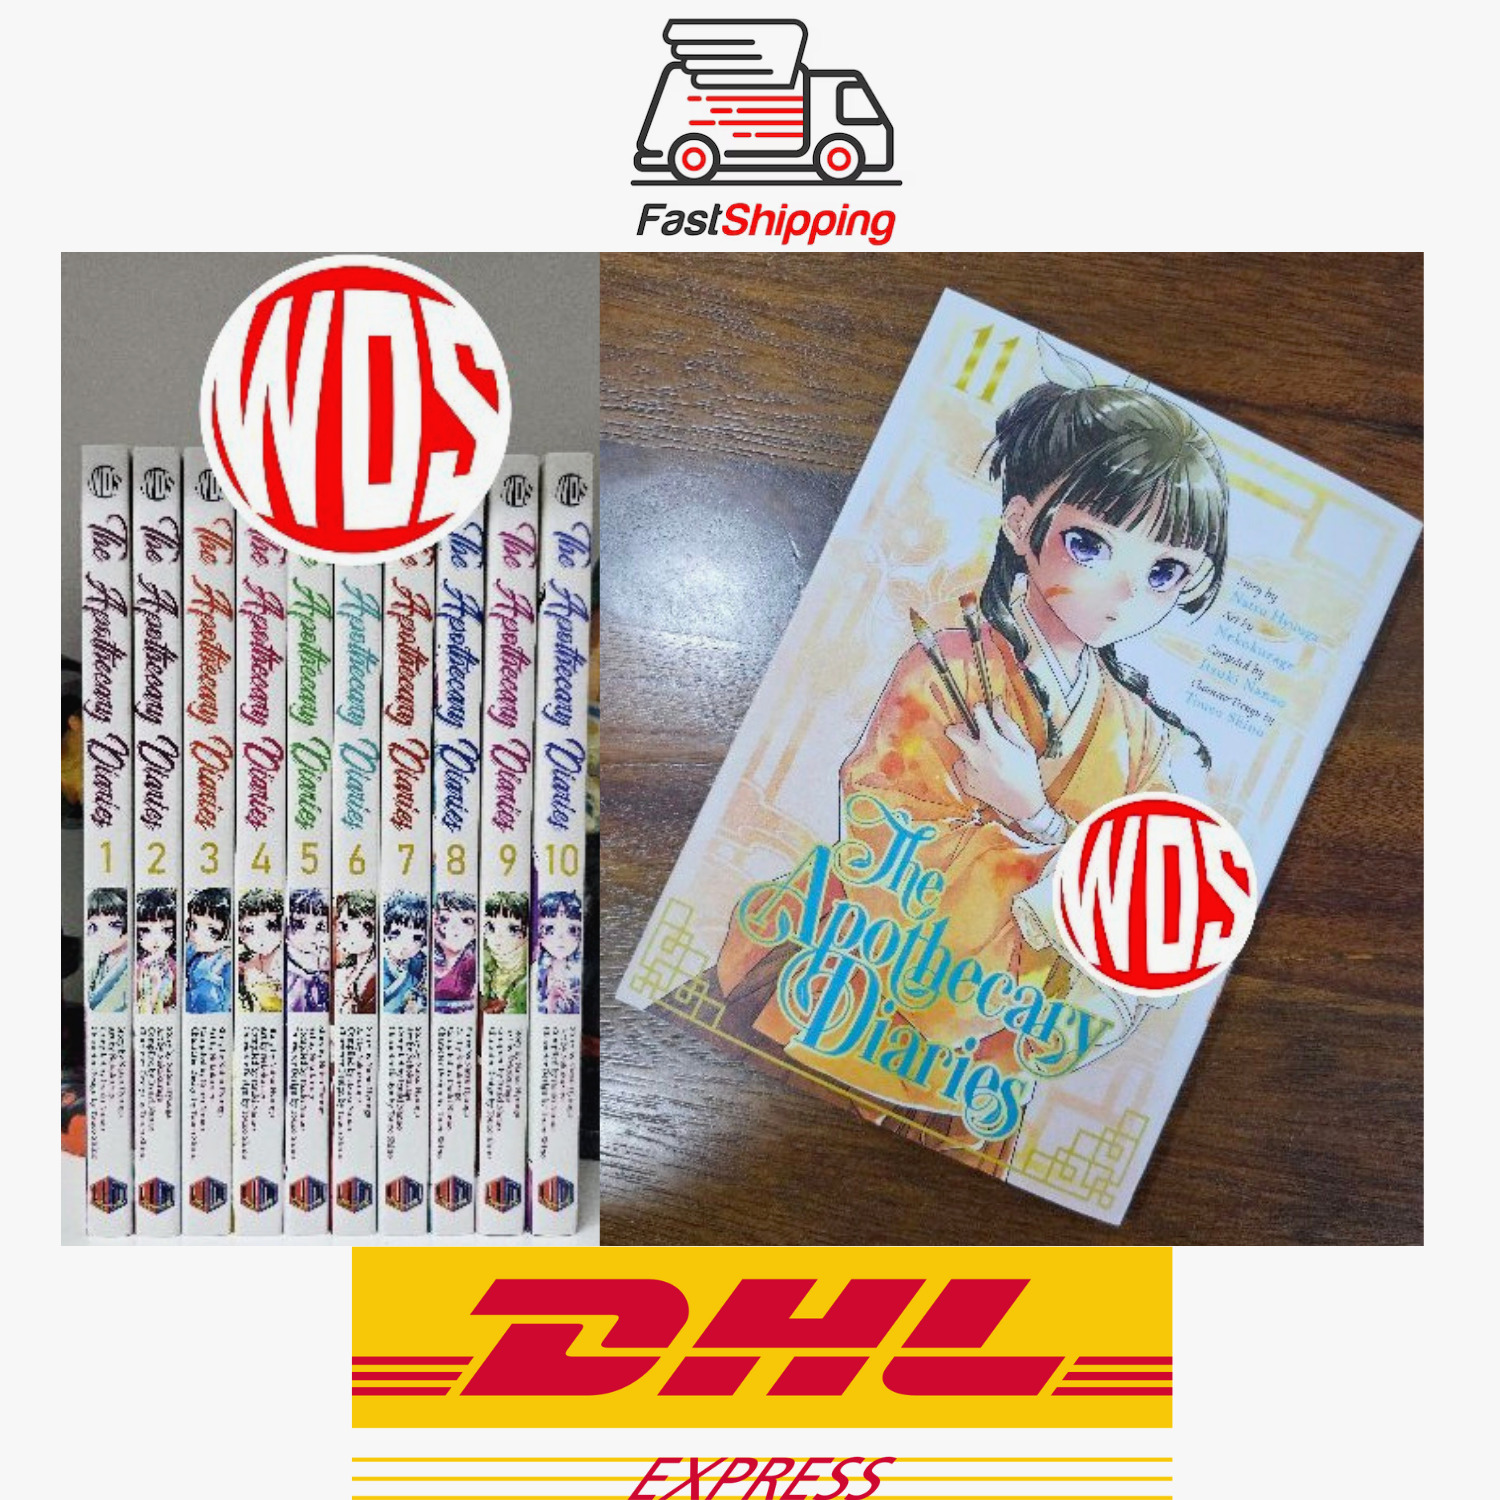 The Apothecary Diaries (English Light Novel) Vol 1-11 Set - DHL FAST SHIPPING